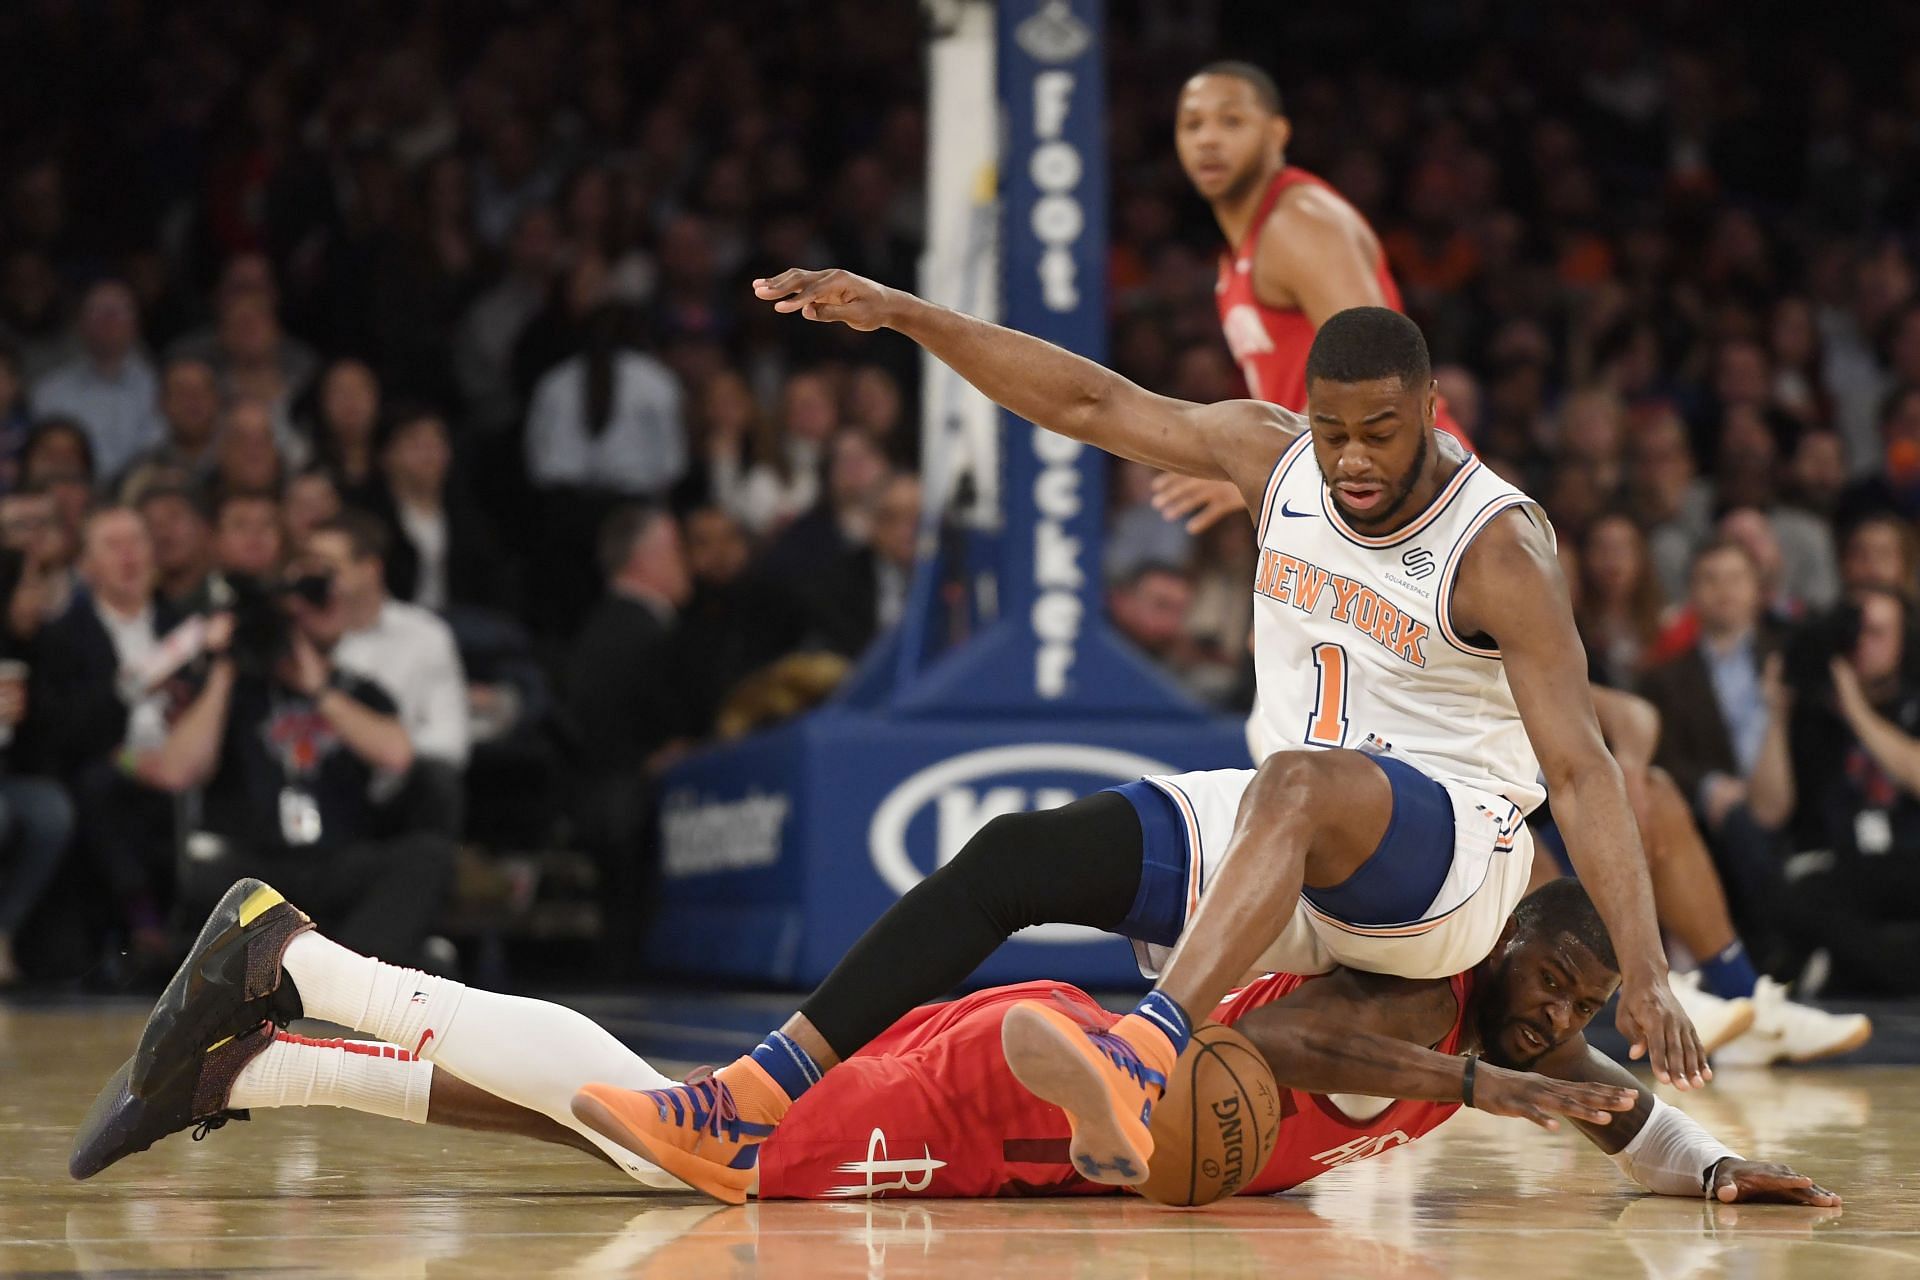 The New York Knicks will host the Houston Rockets in a regular-season game on November 20th